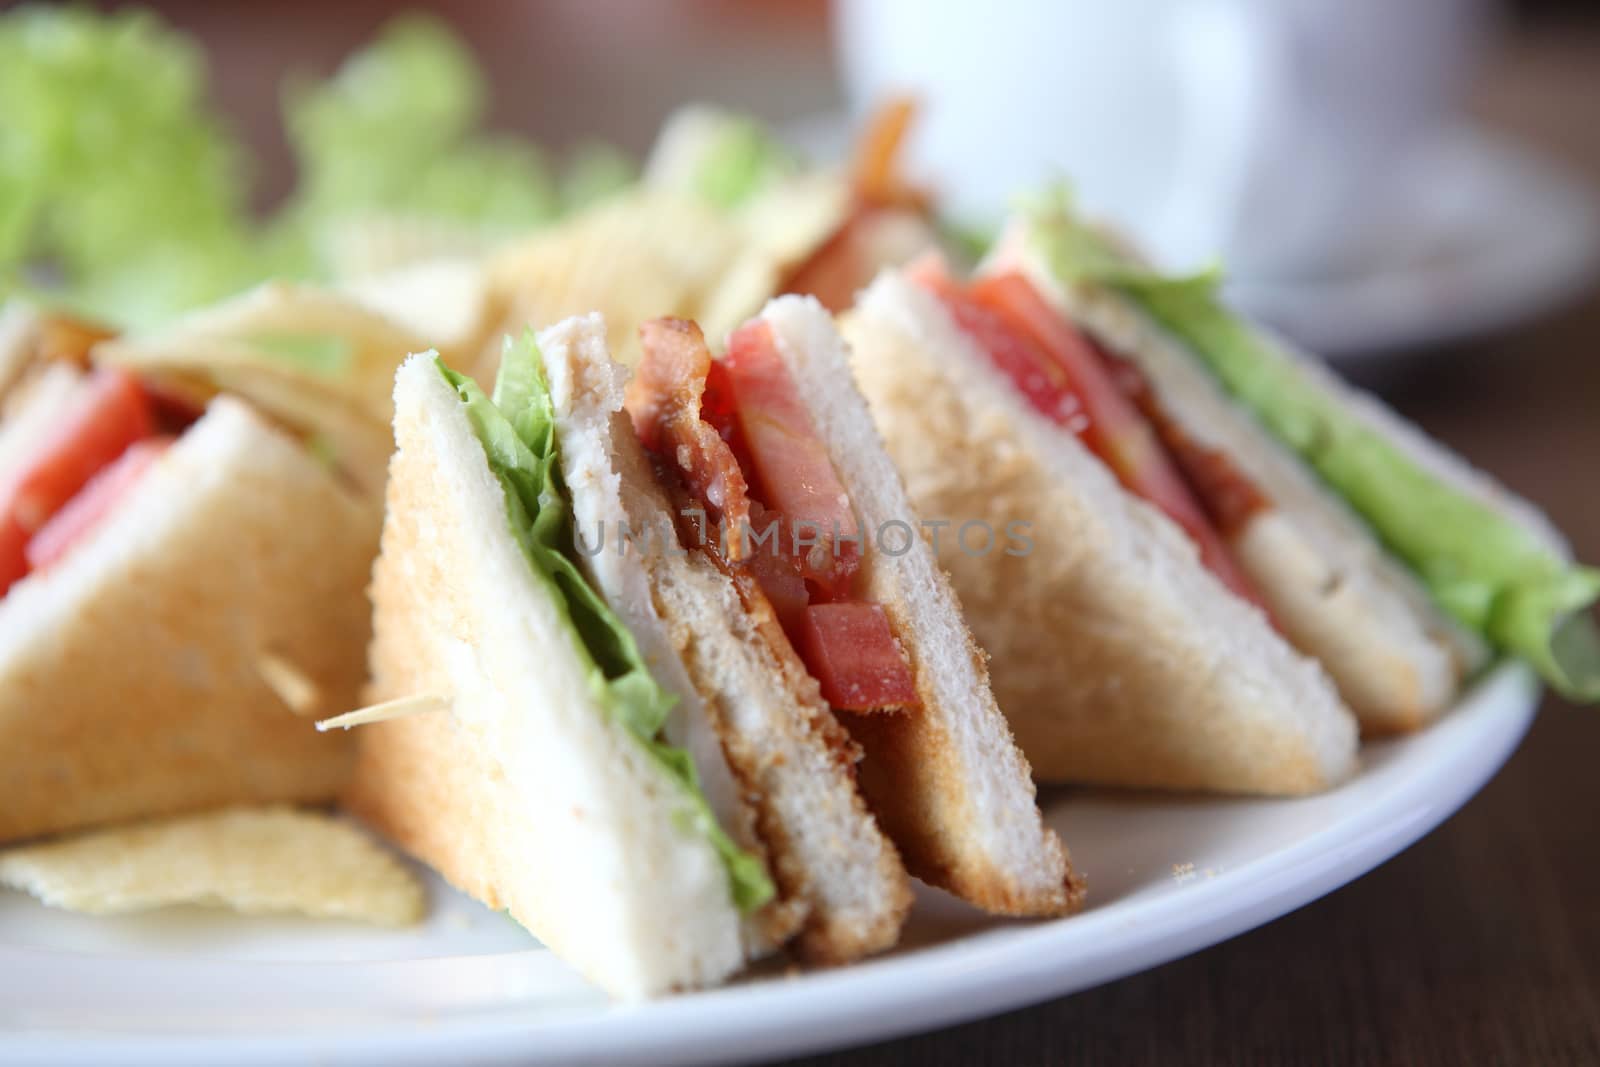 Club sandwich with coffee on wood background